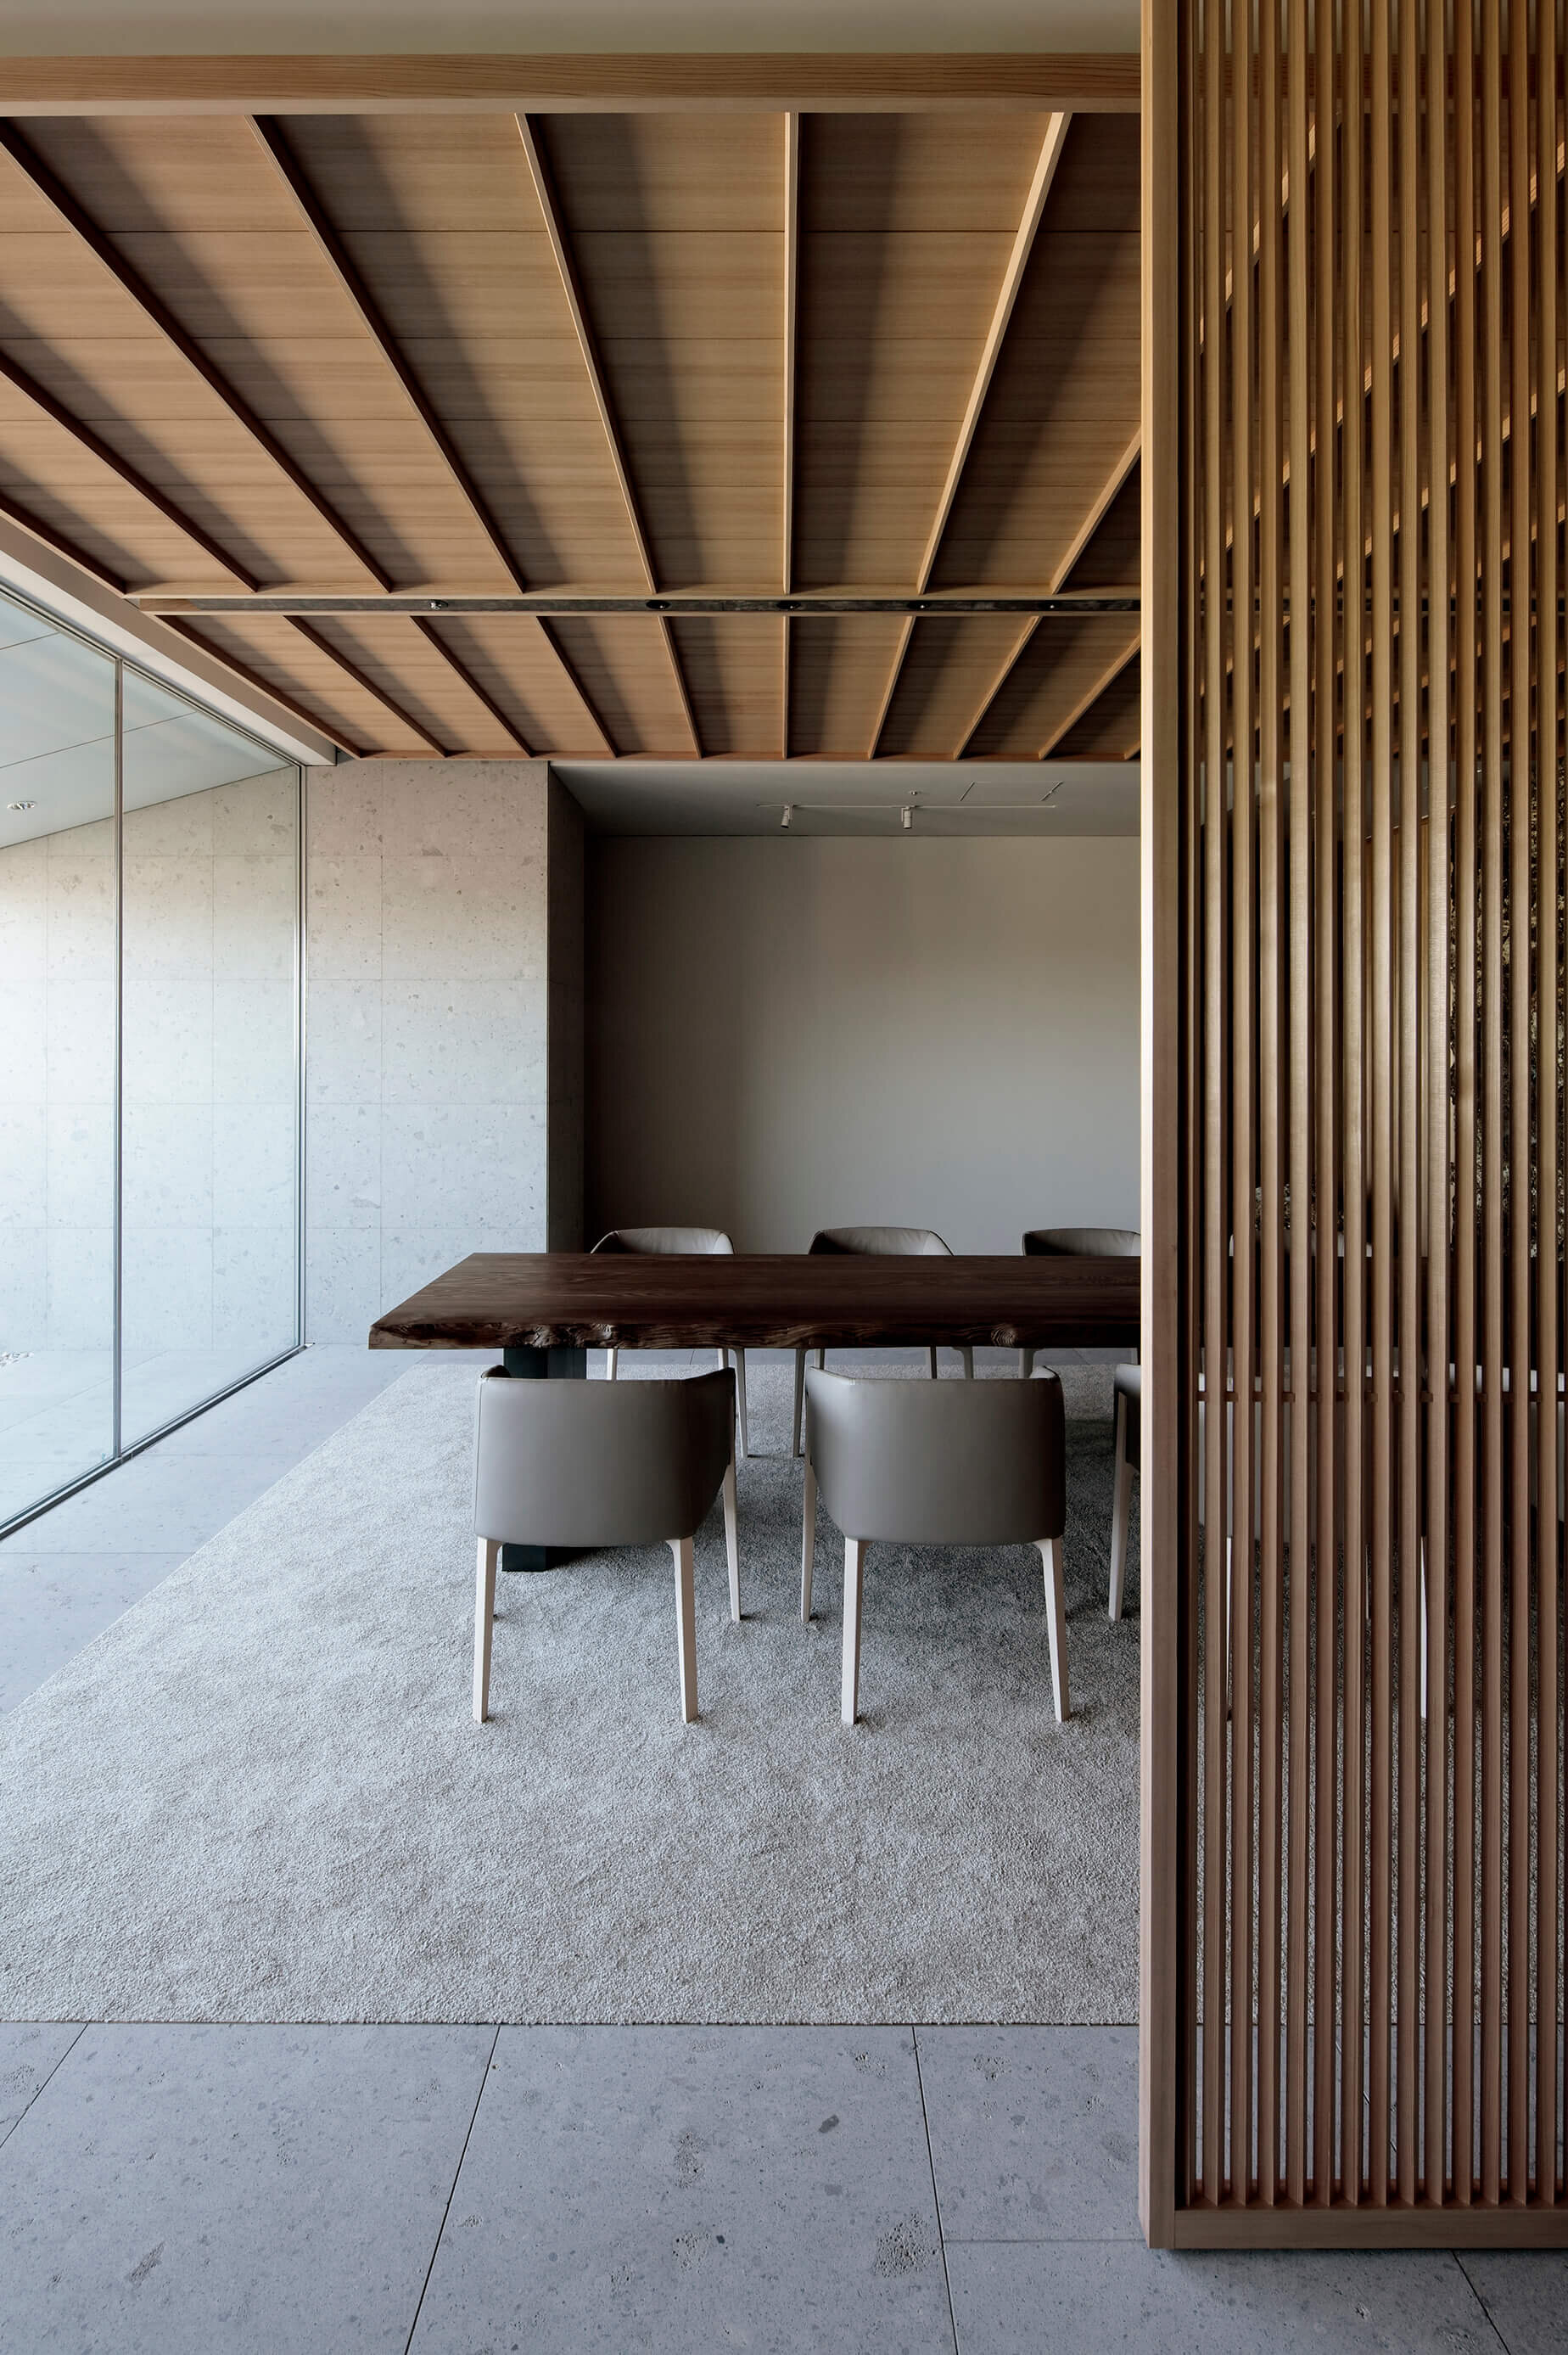 sakakida-tomoyuki-architect-ntv-office-interior-design-tokyo-japan-idreit-007ms.jpg